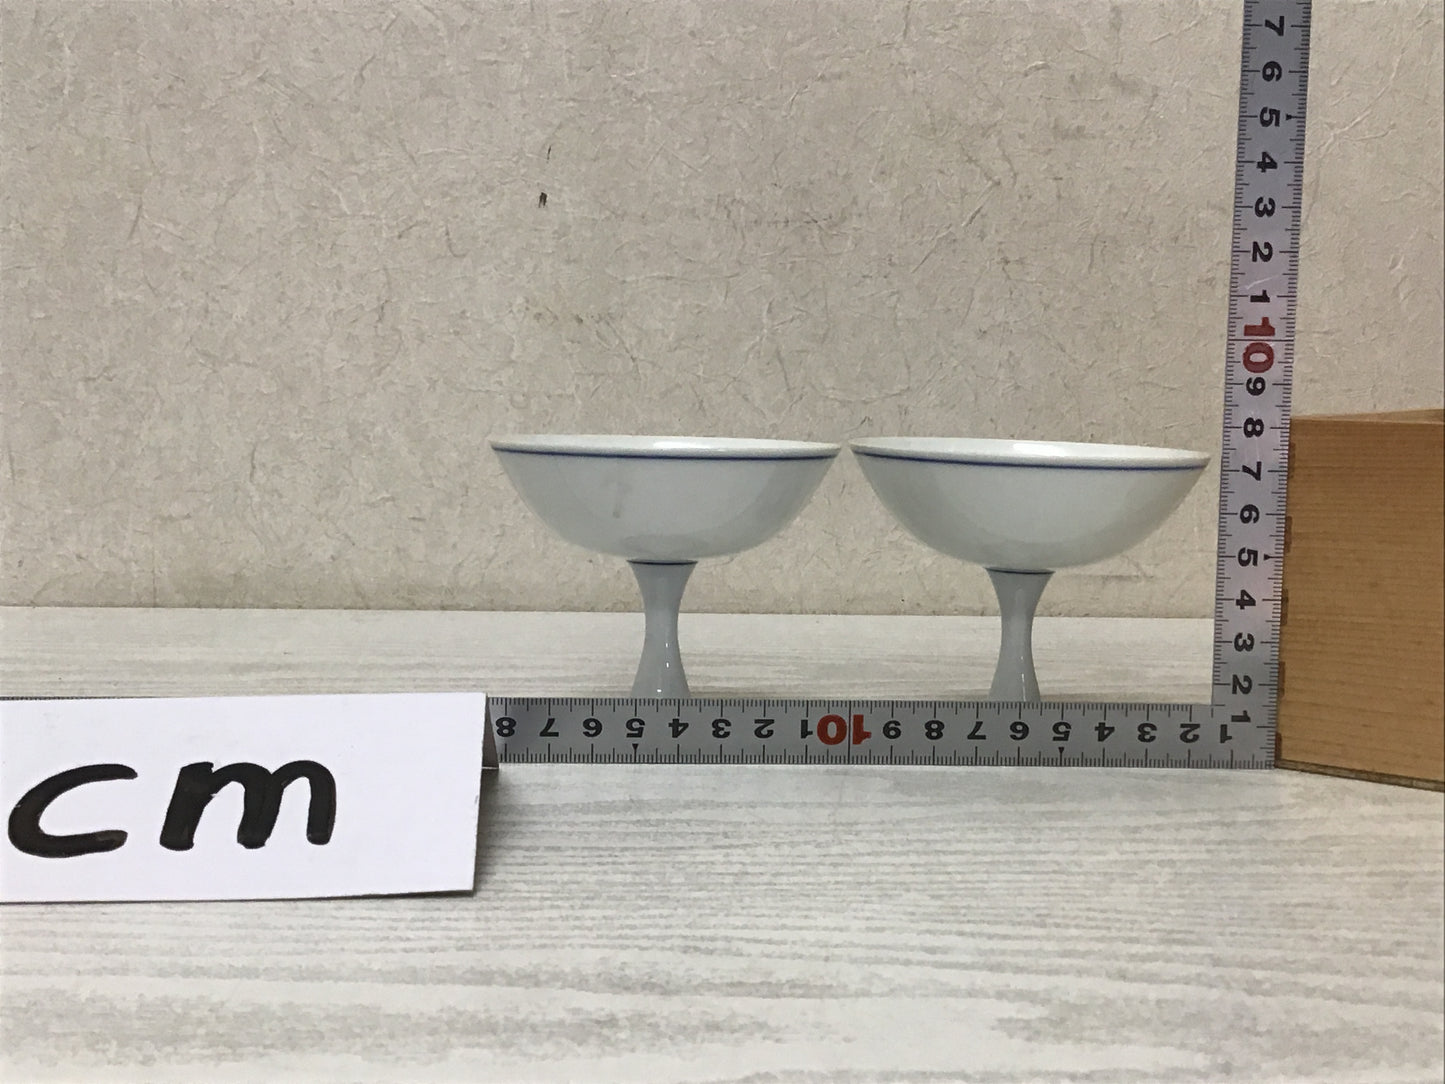 Y2727 CUP Kyo-ware pair glassware signed box Japanese antique tableware vintage